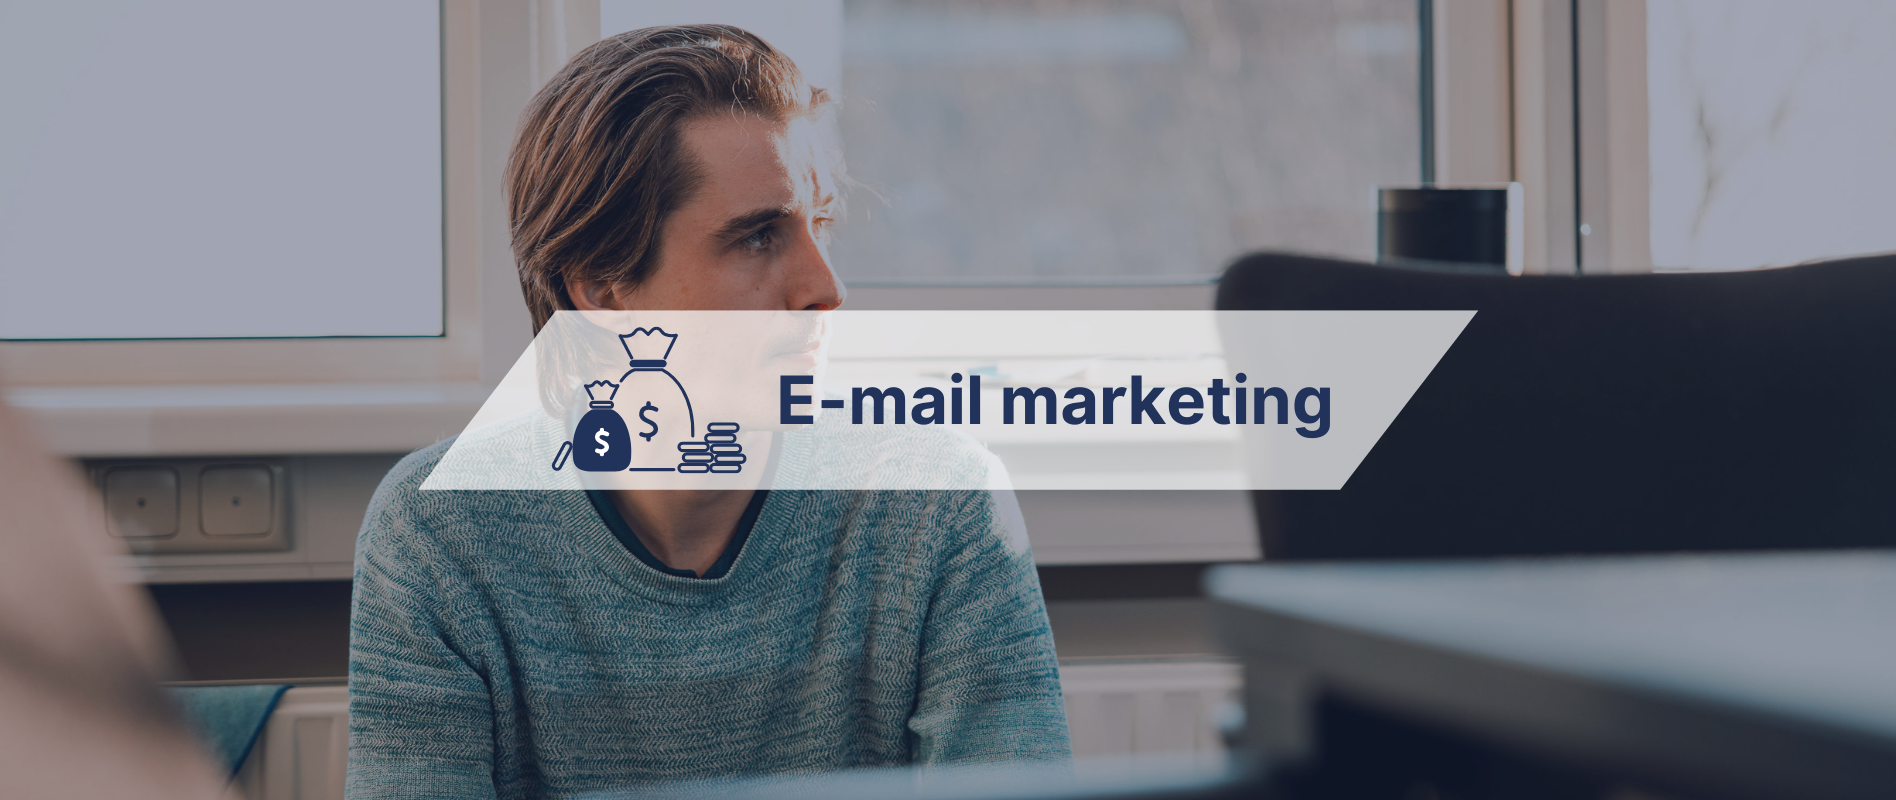 E-mail marketing automation versus e-mail marketing